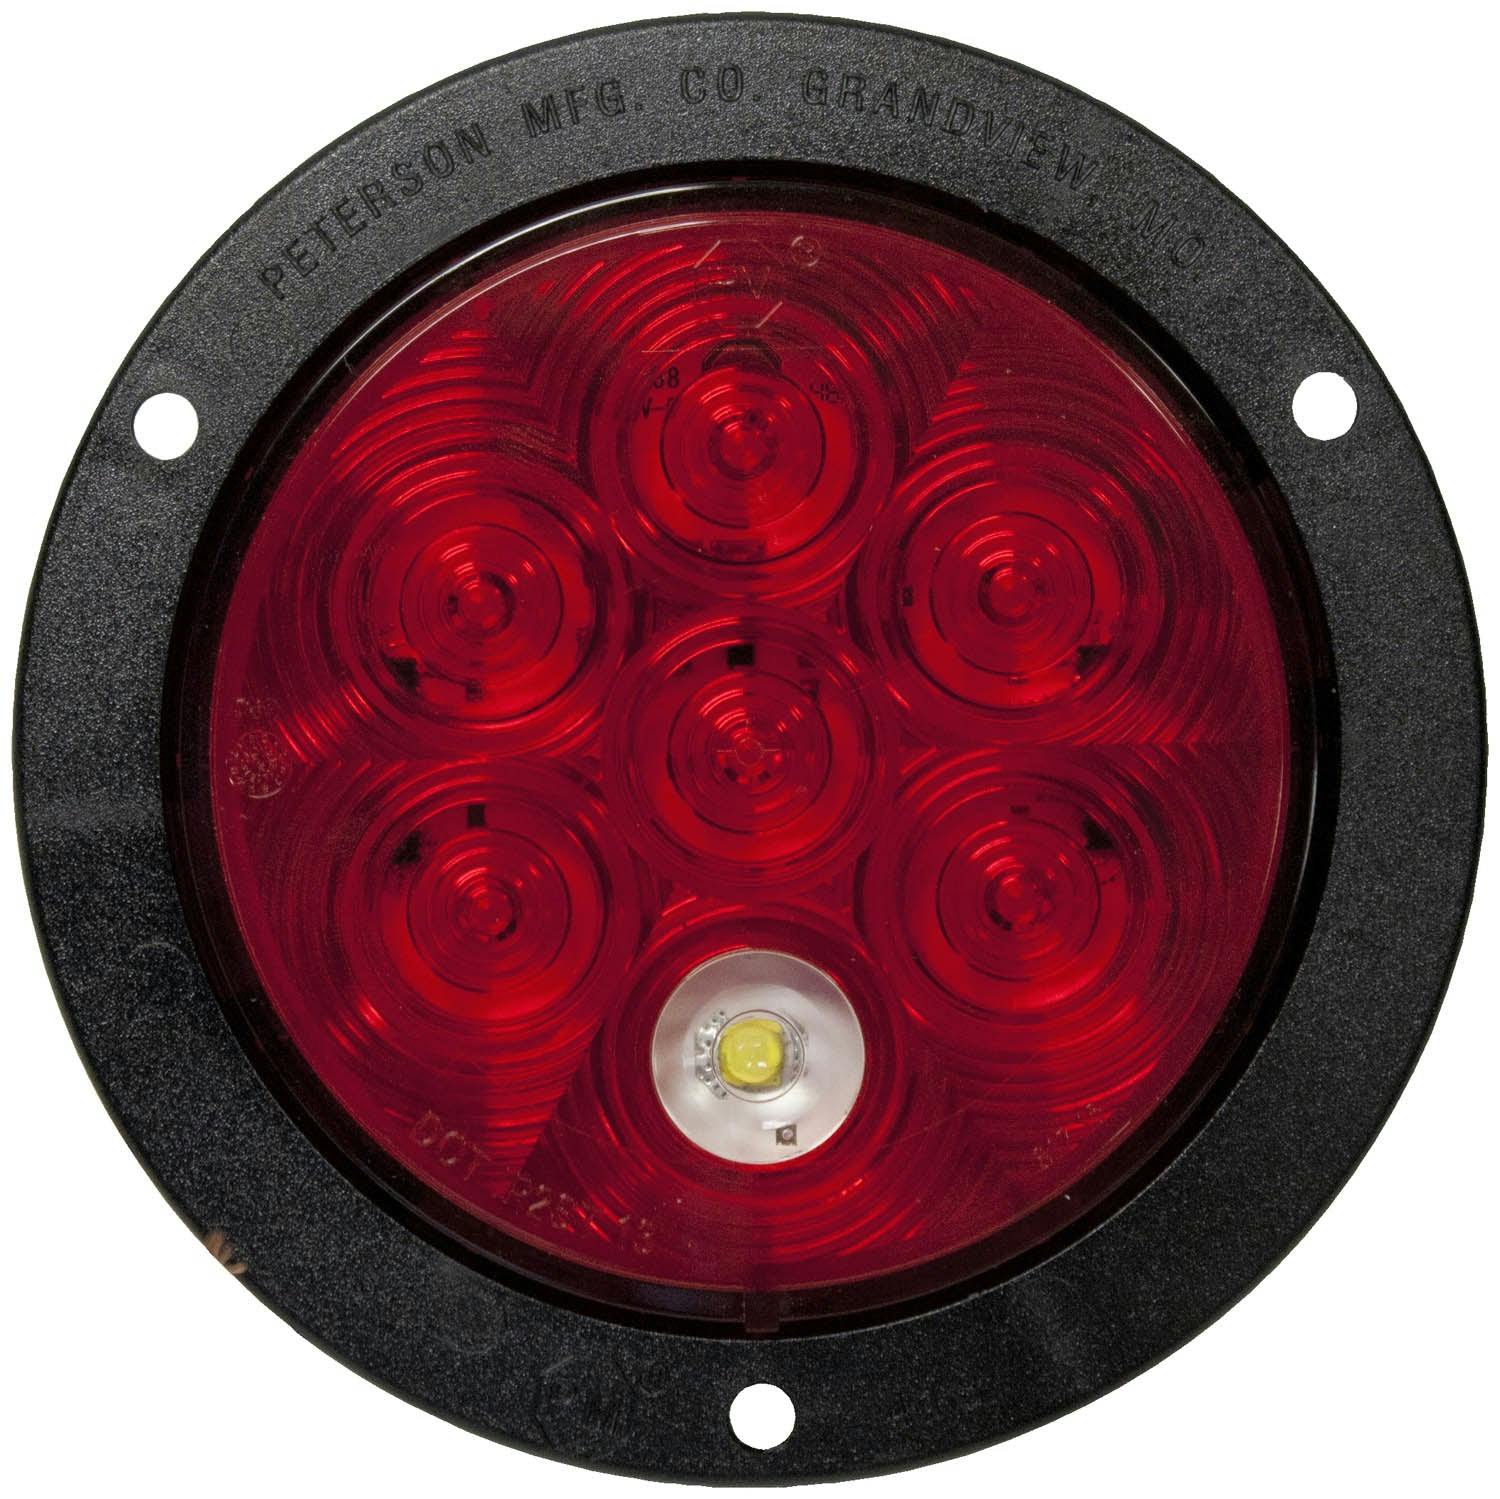 LED Stop/Turn/Tail & Back-Up Light, Round, Flange-Mount w/ Plug, Kit 4" Multi-volt, red + white